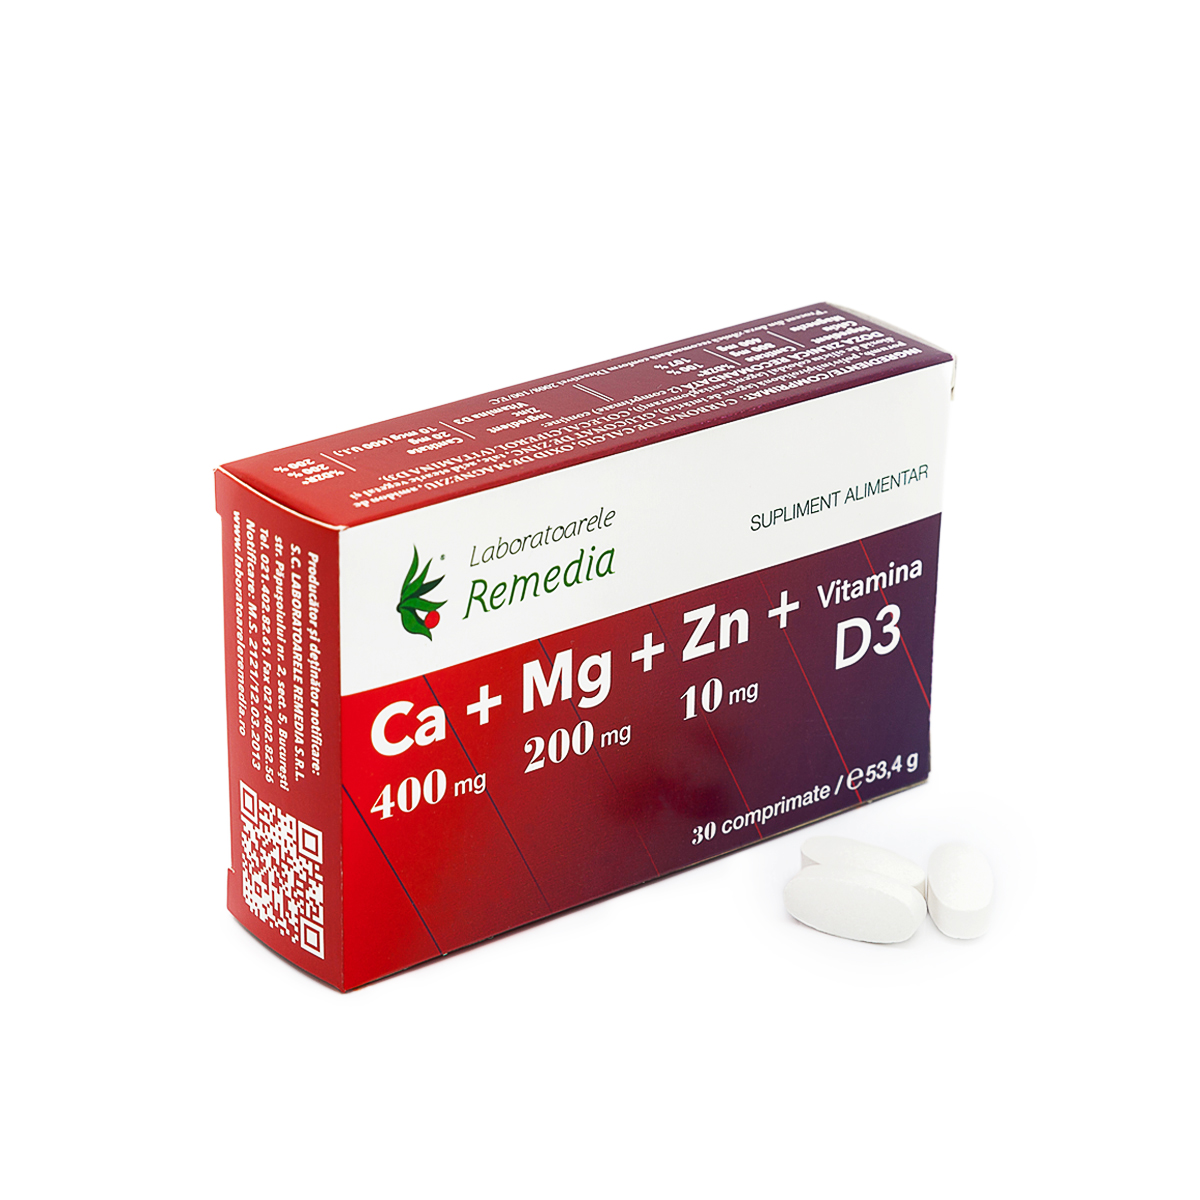 Ca + Mg + Zn + Vitamina D3, 30 comprimate, Remedia